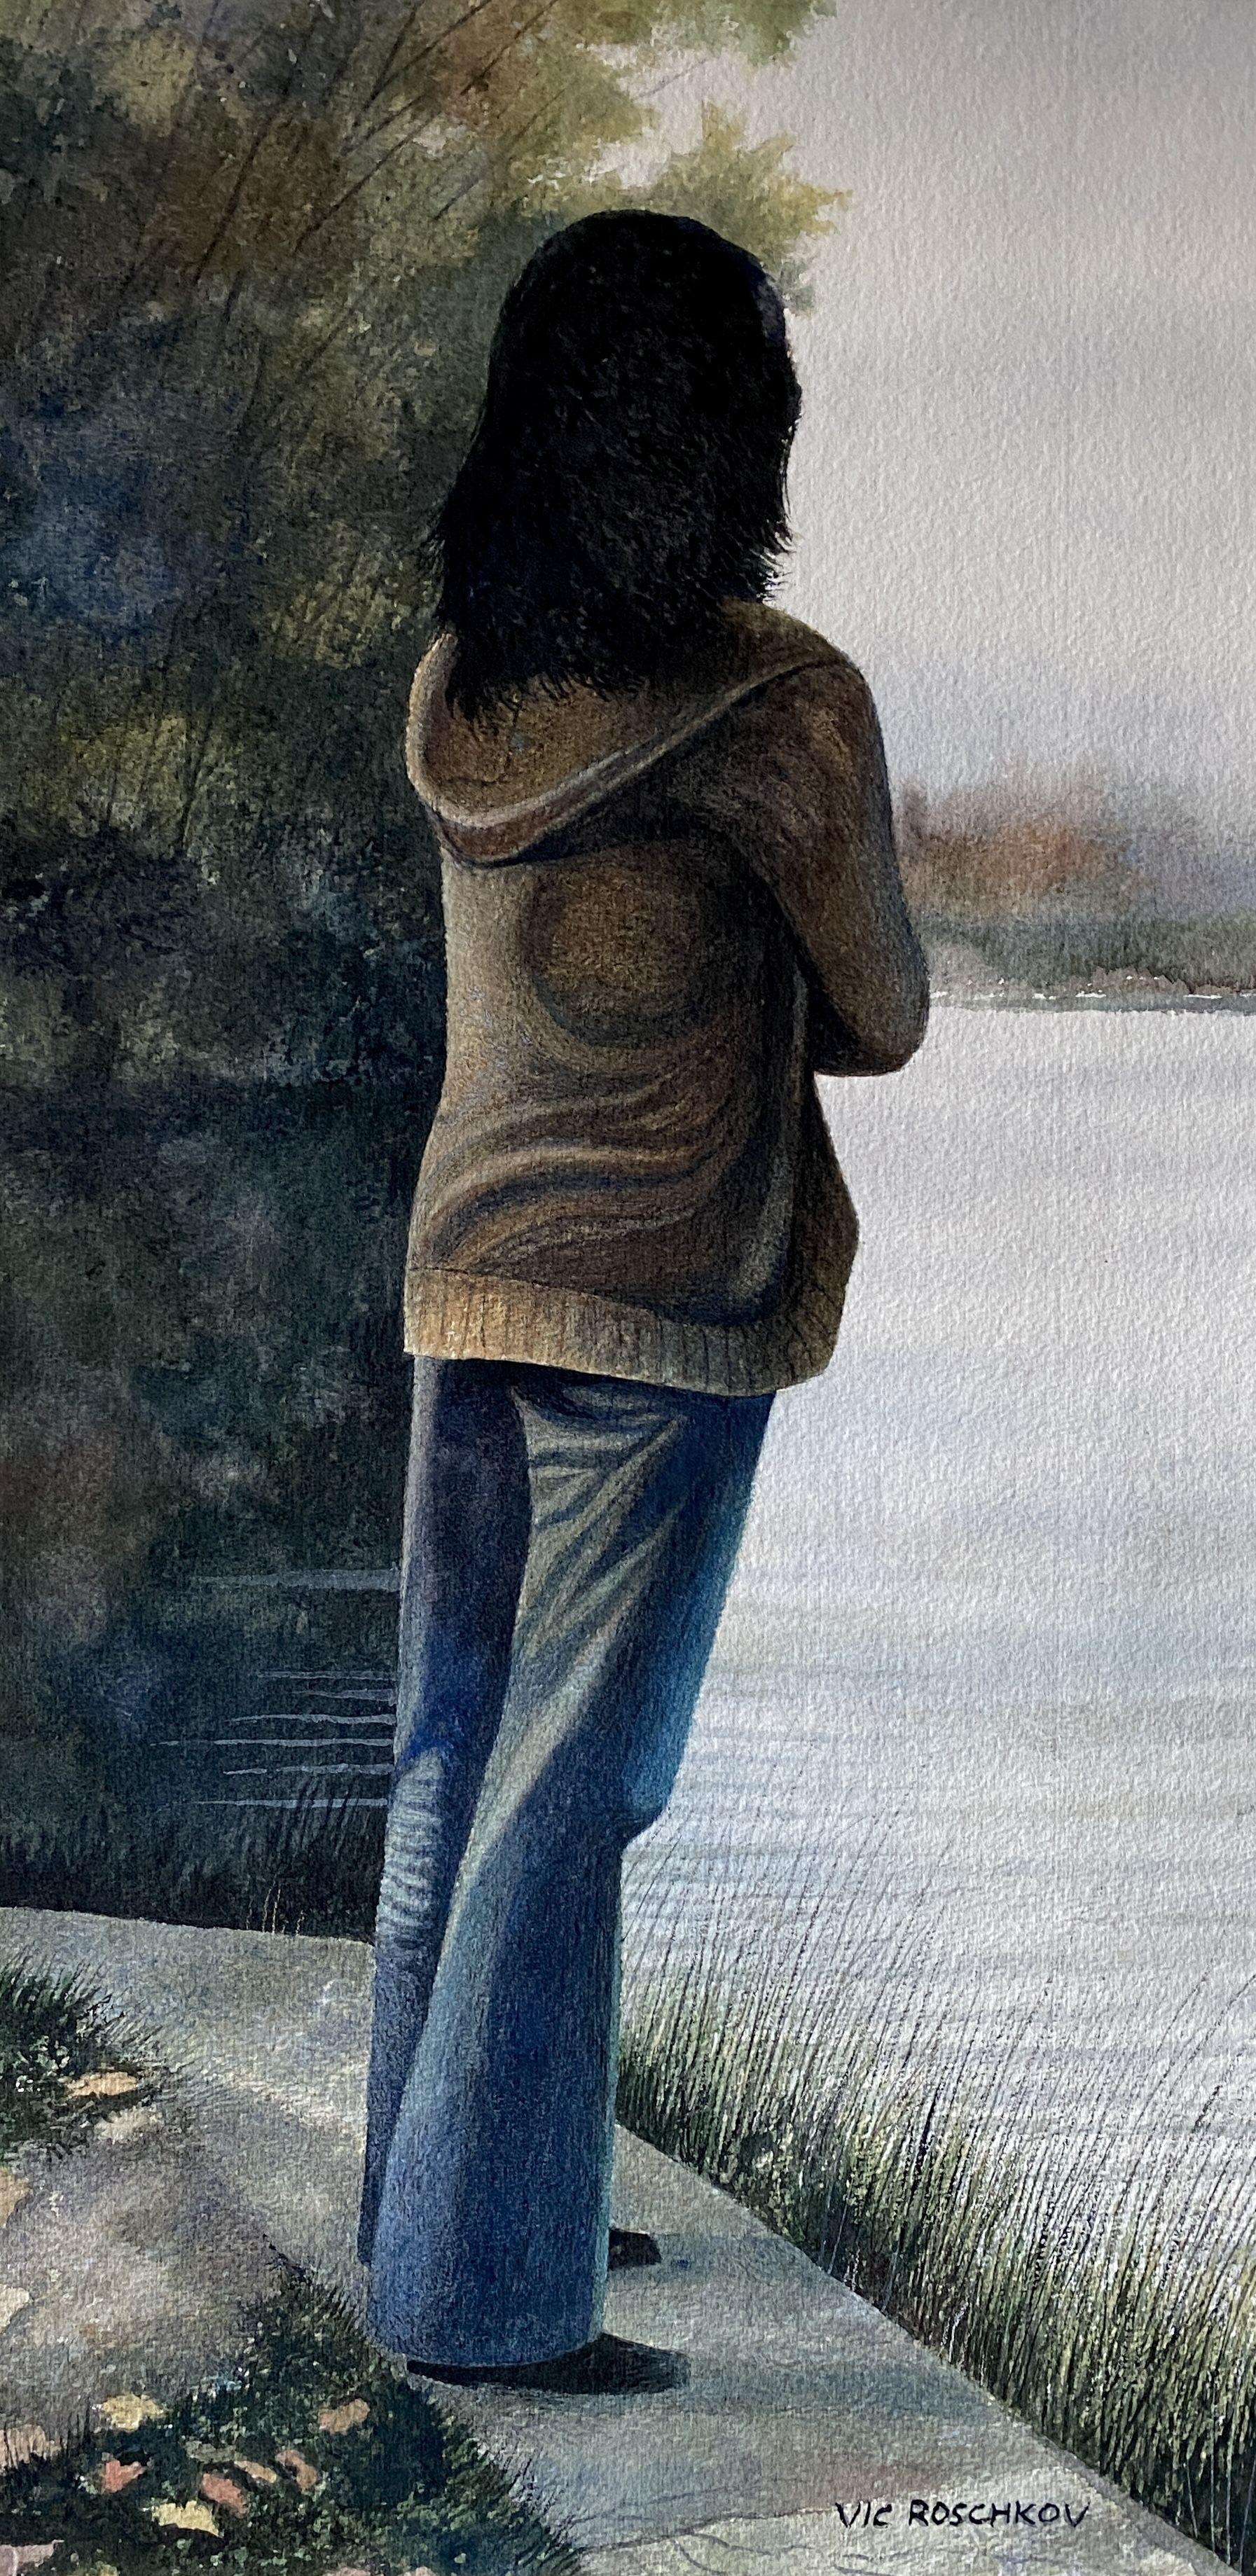 « Pondering Life », peinture, aquarelle sur papier aquarelle - Art de Victor Roschkov